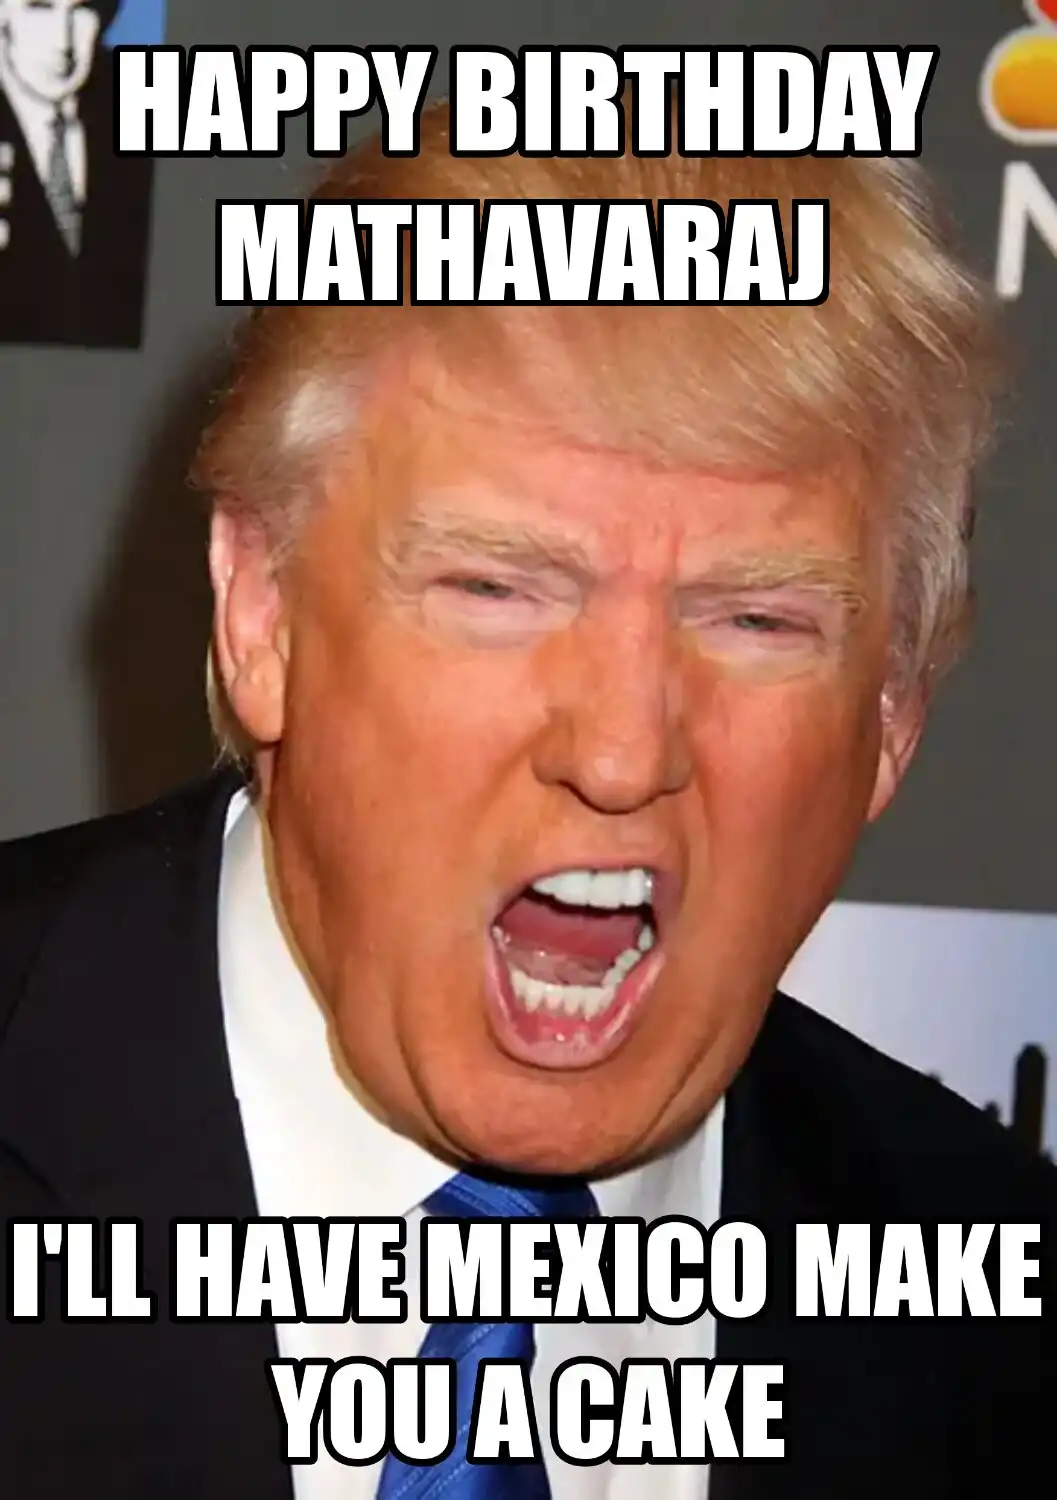 Happy Birthday Mathavaraj Mexico Make You A Cake Meme